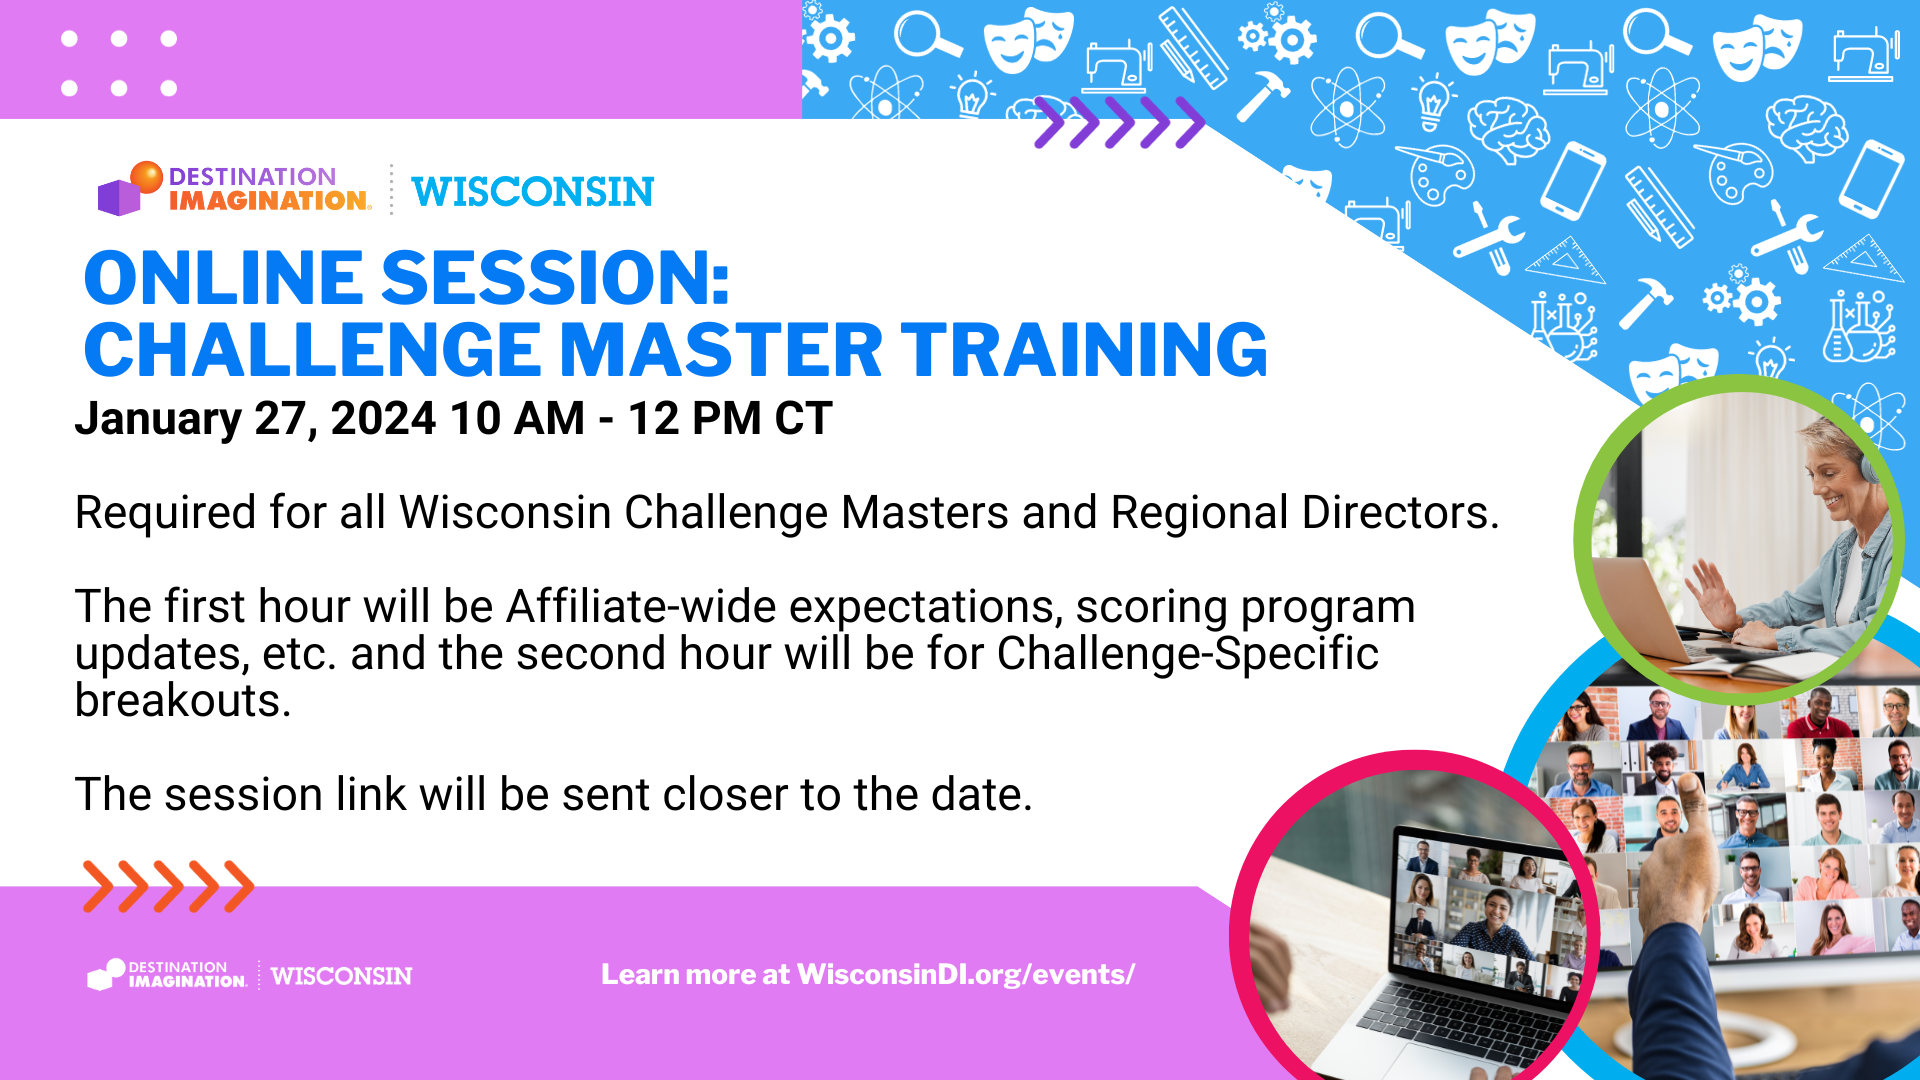 Wisconsin Destination IMagination Challenge Master Training